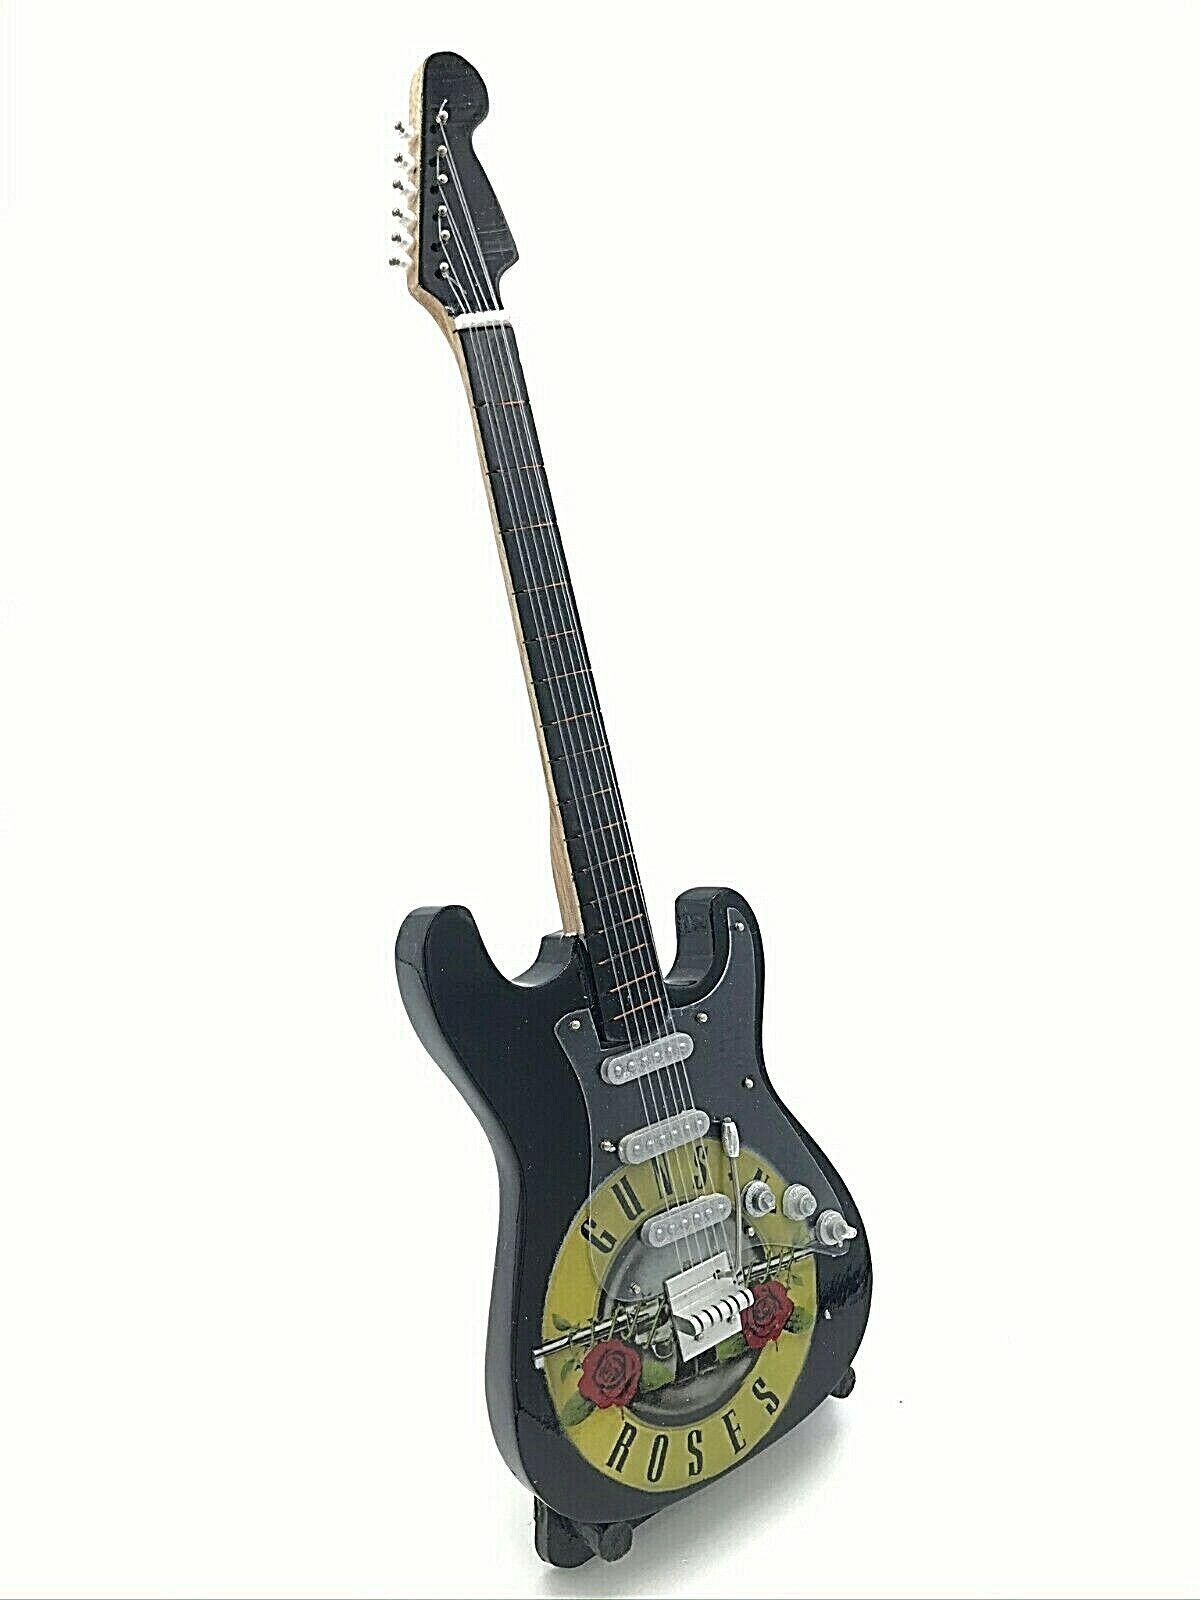 Miniature Fender Standard  Stratocaster Guitar - guns n roses (Ornamental) 